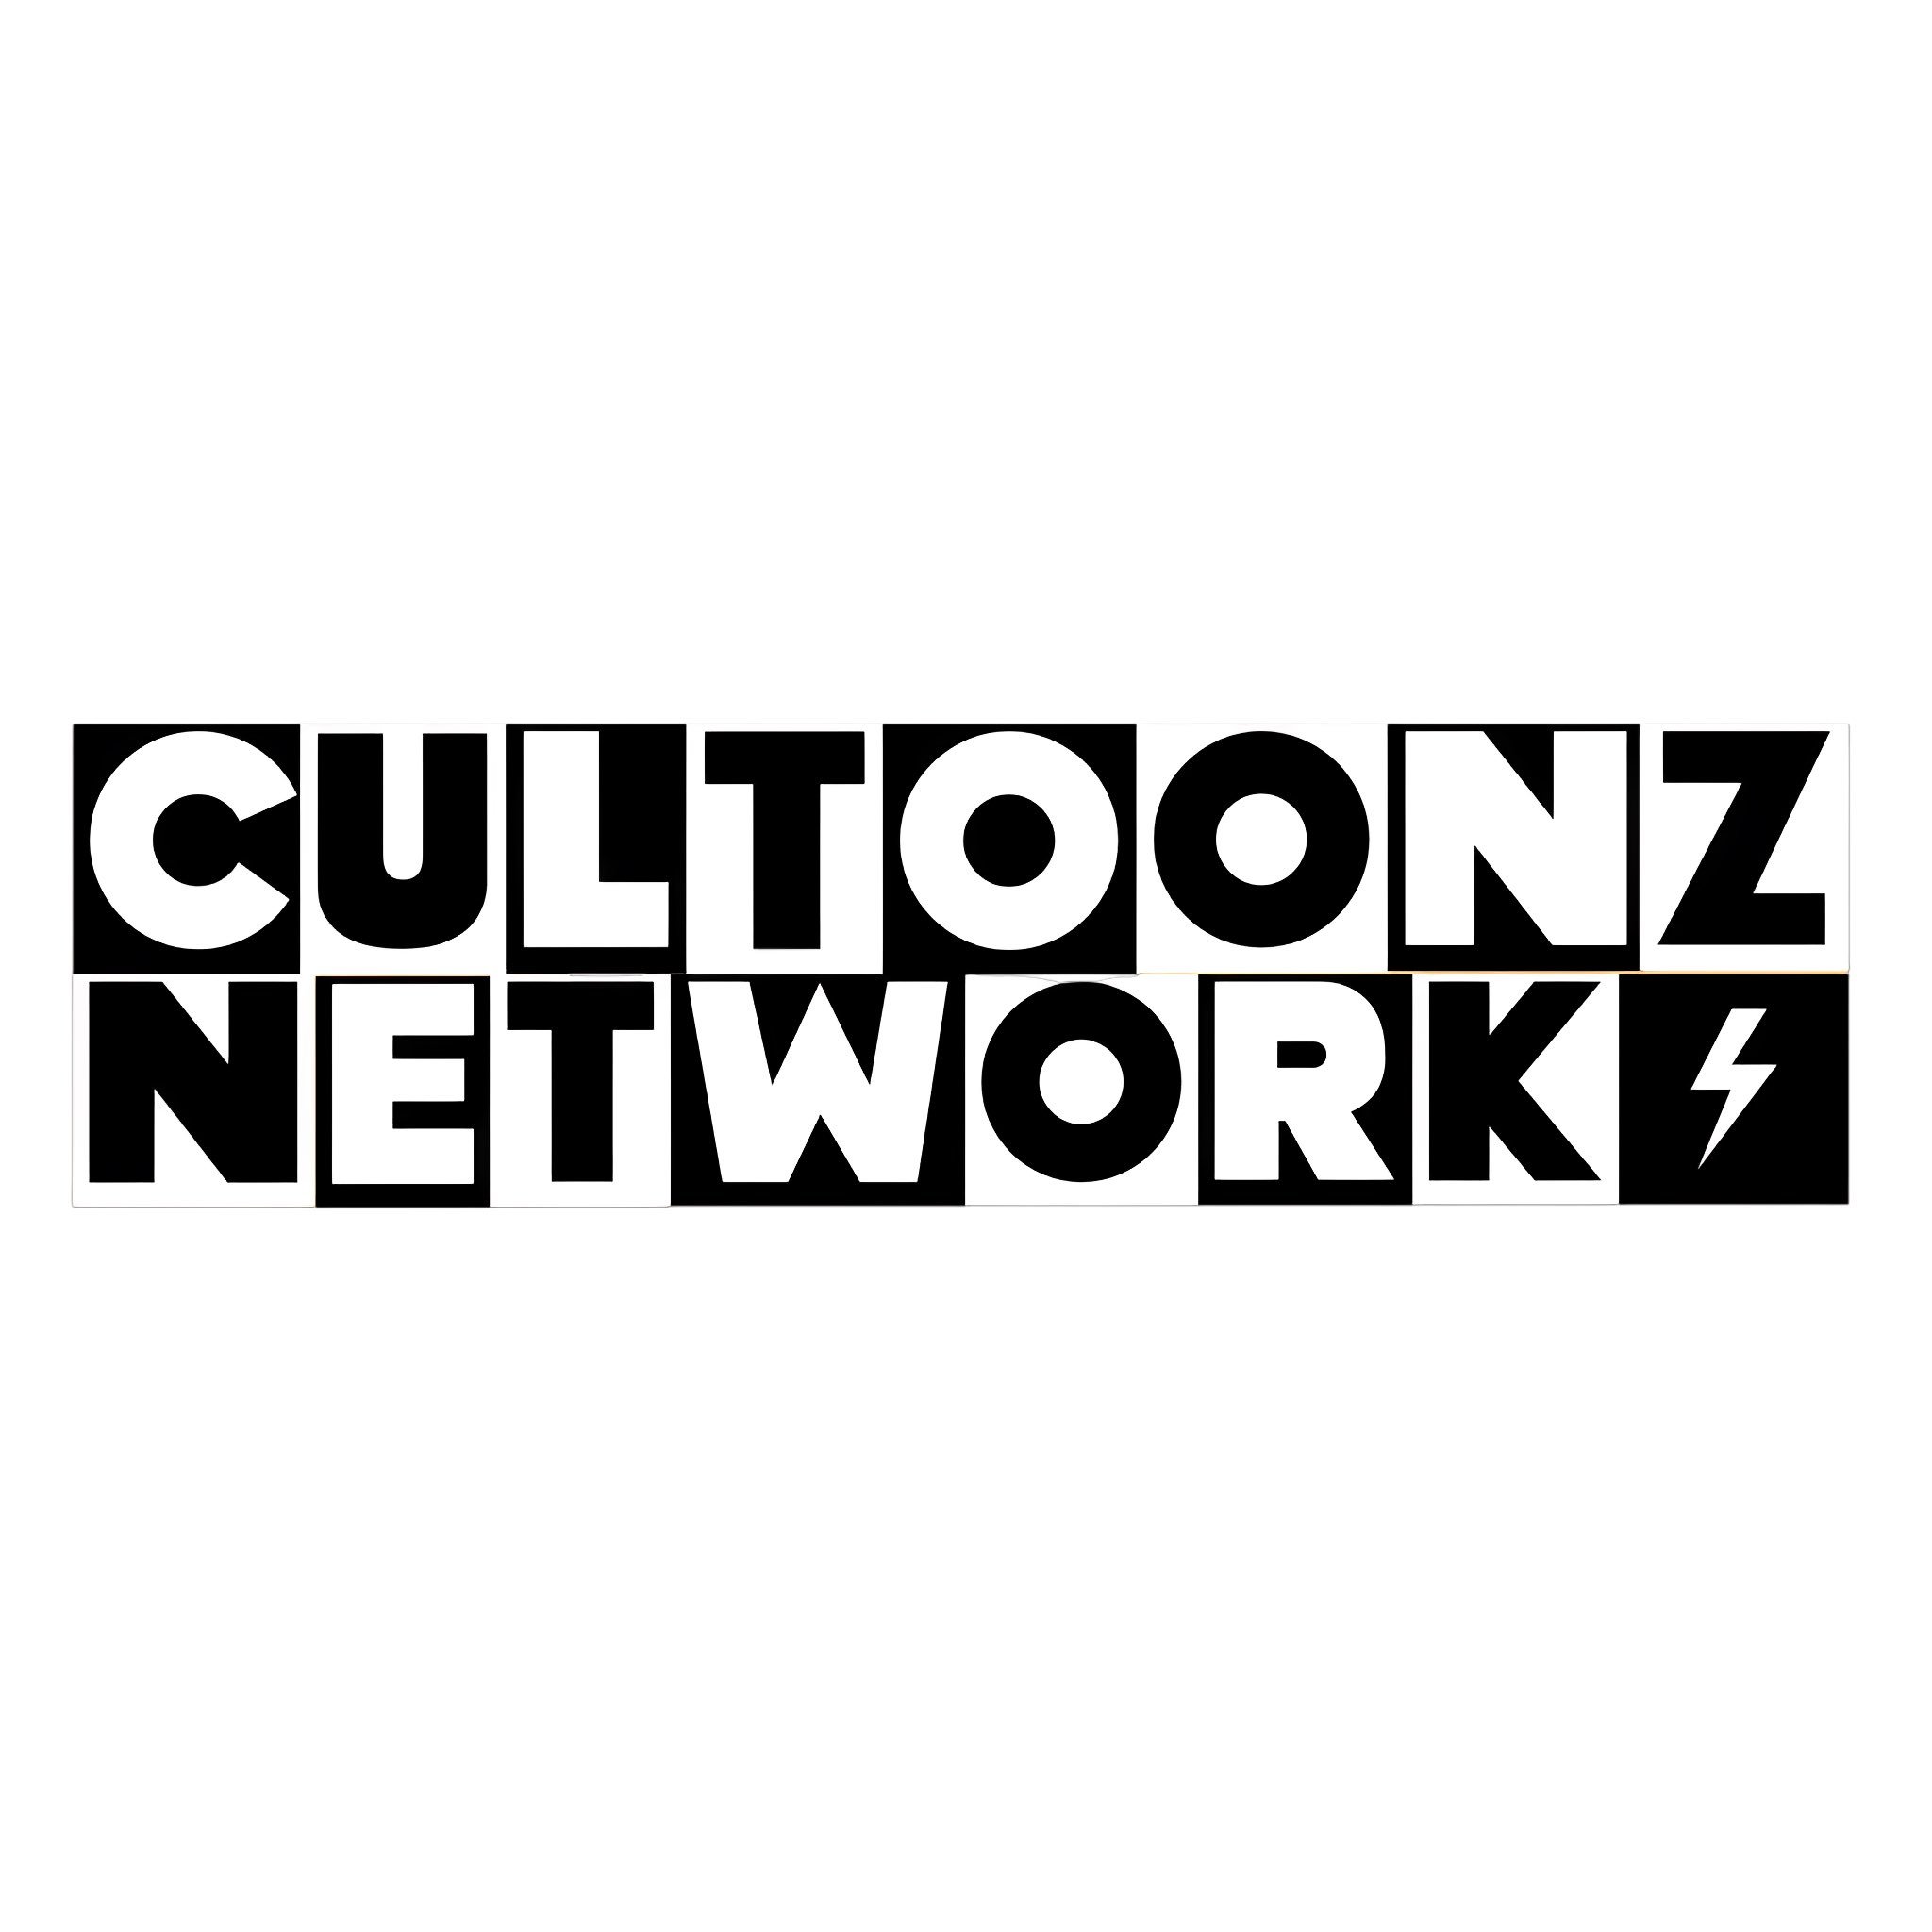 CULToonz Network